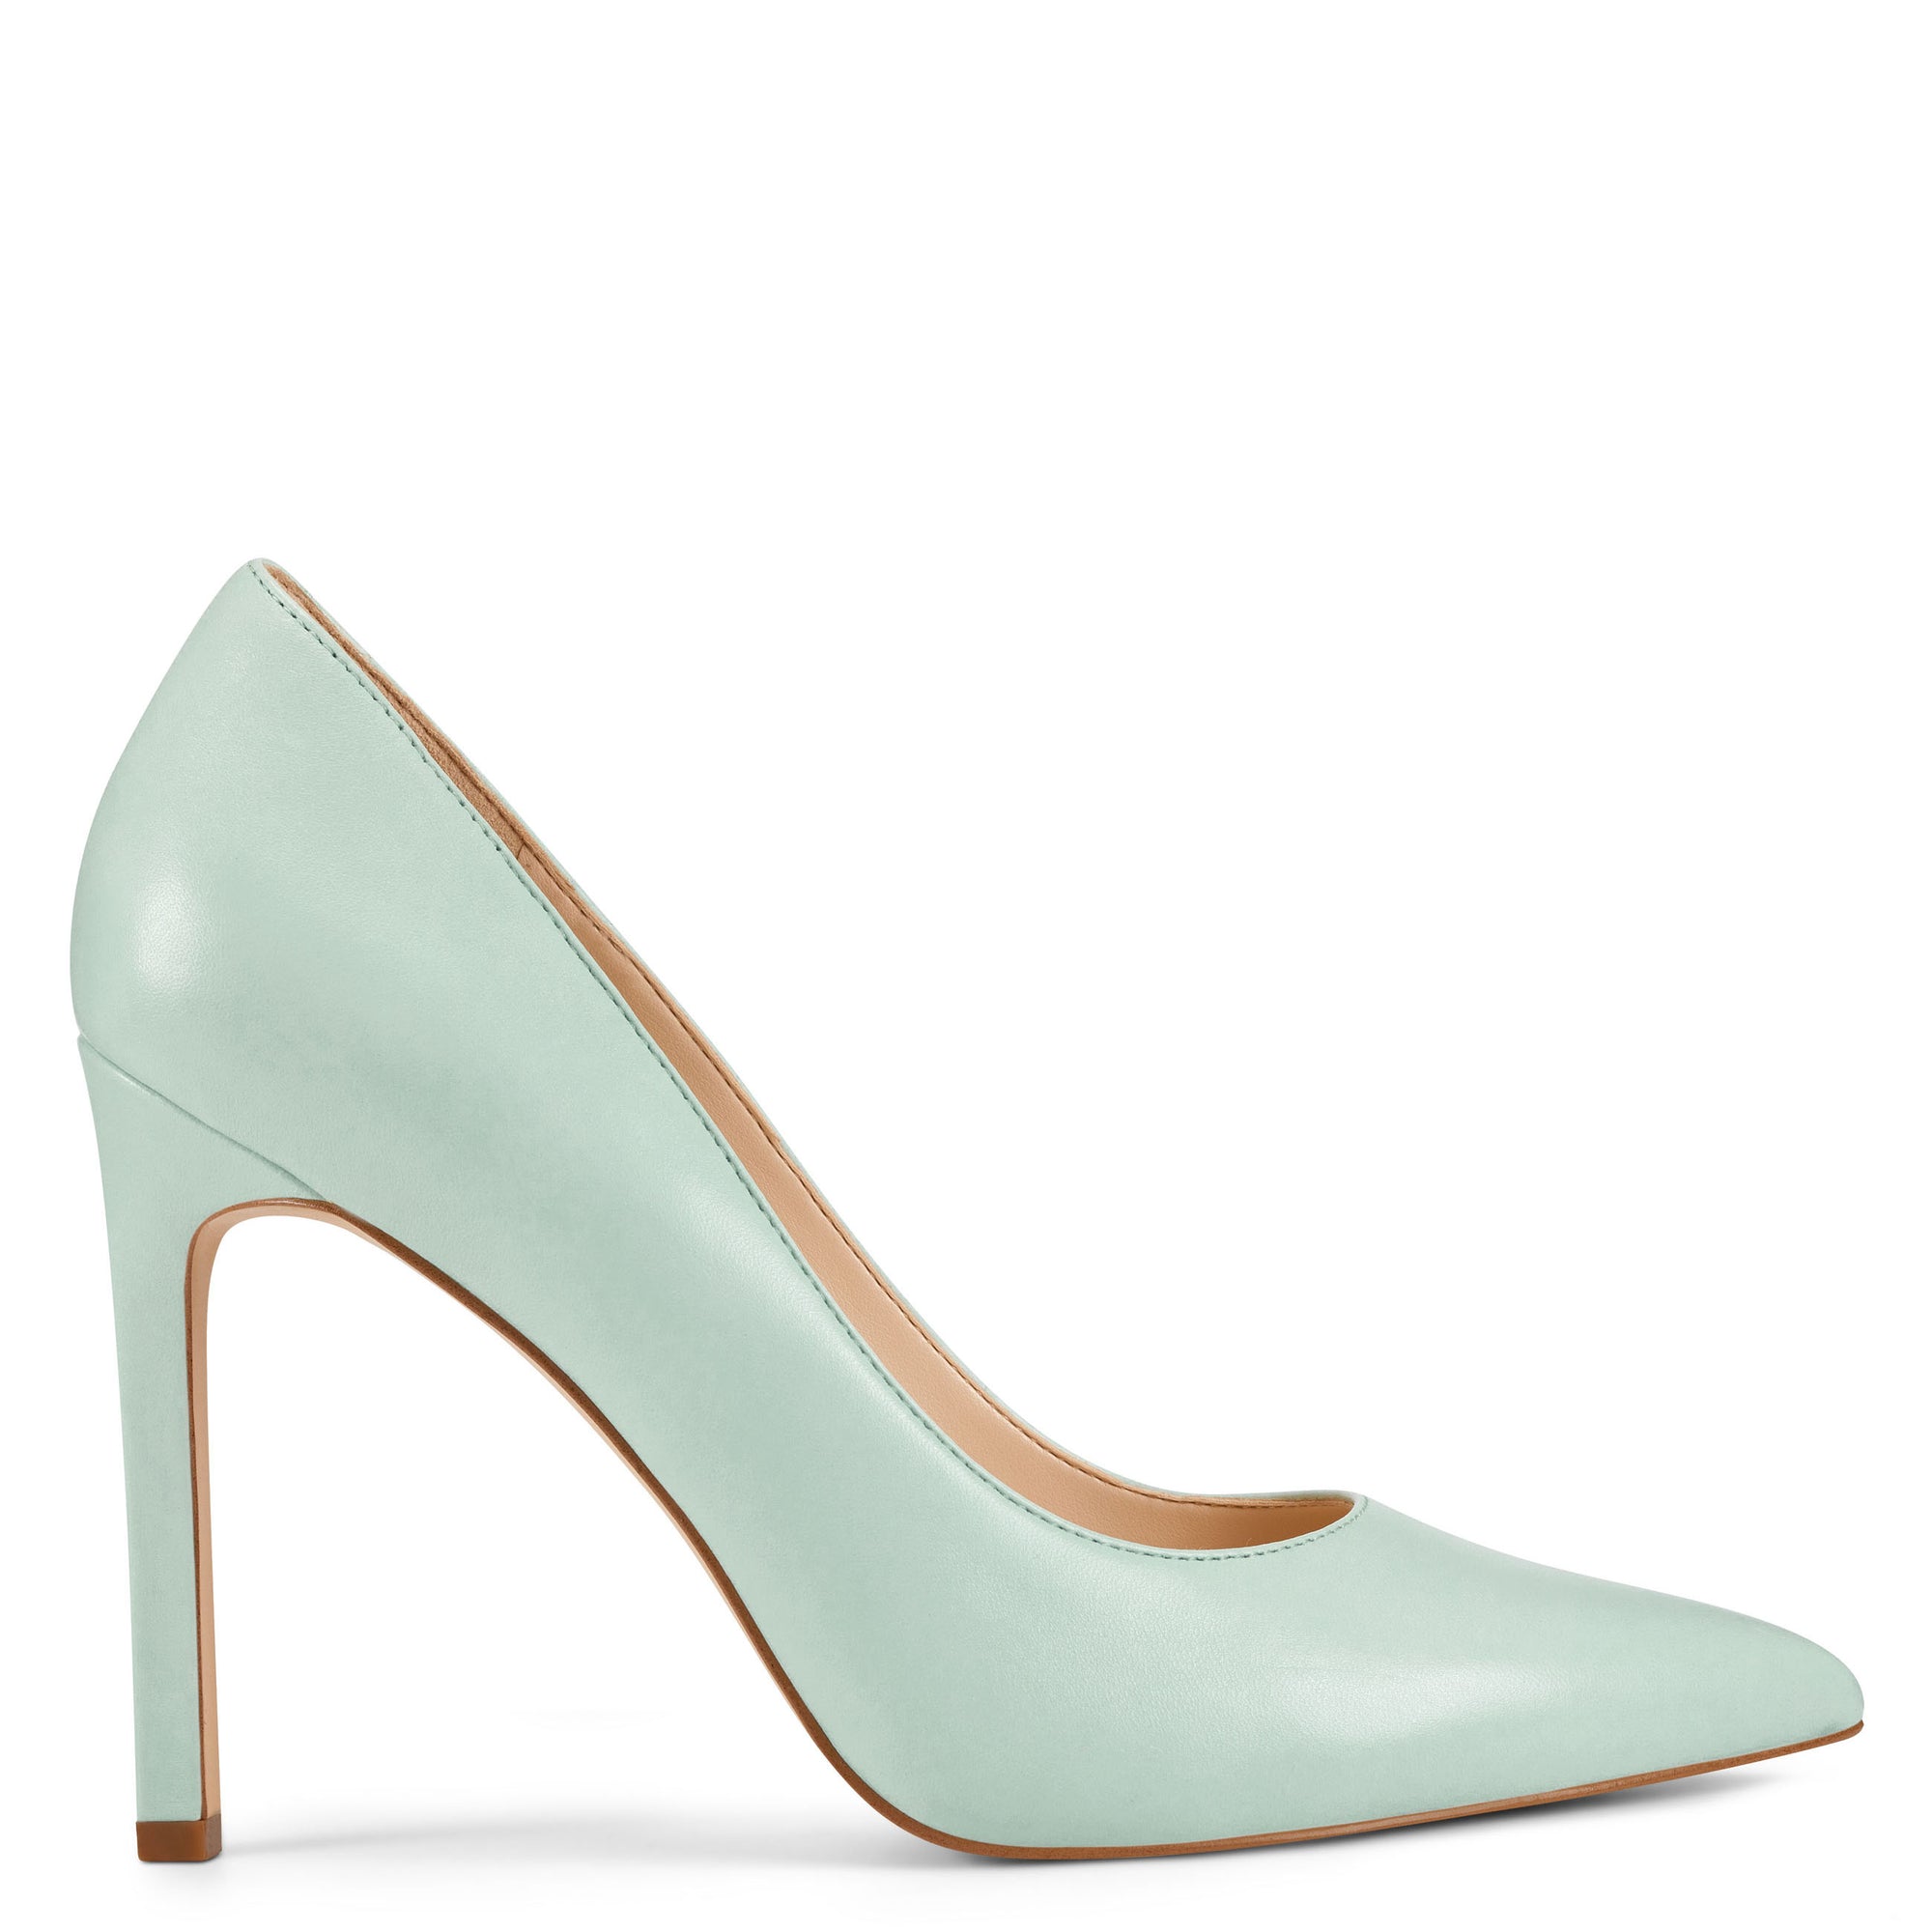 mint colored high heels